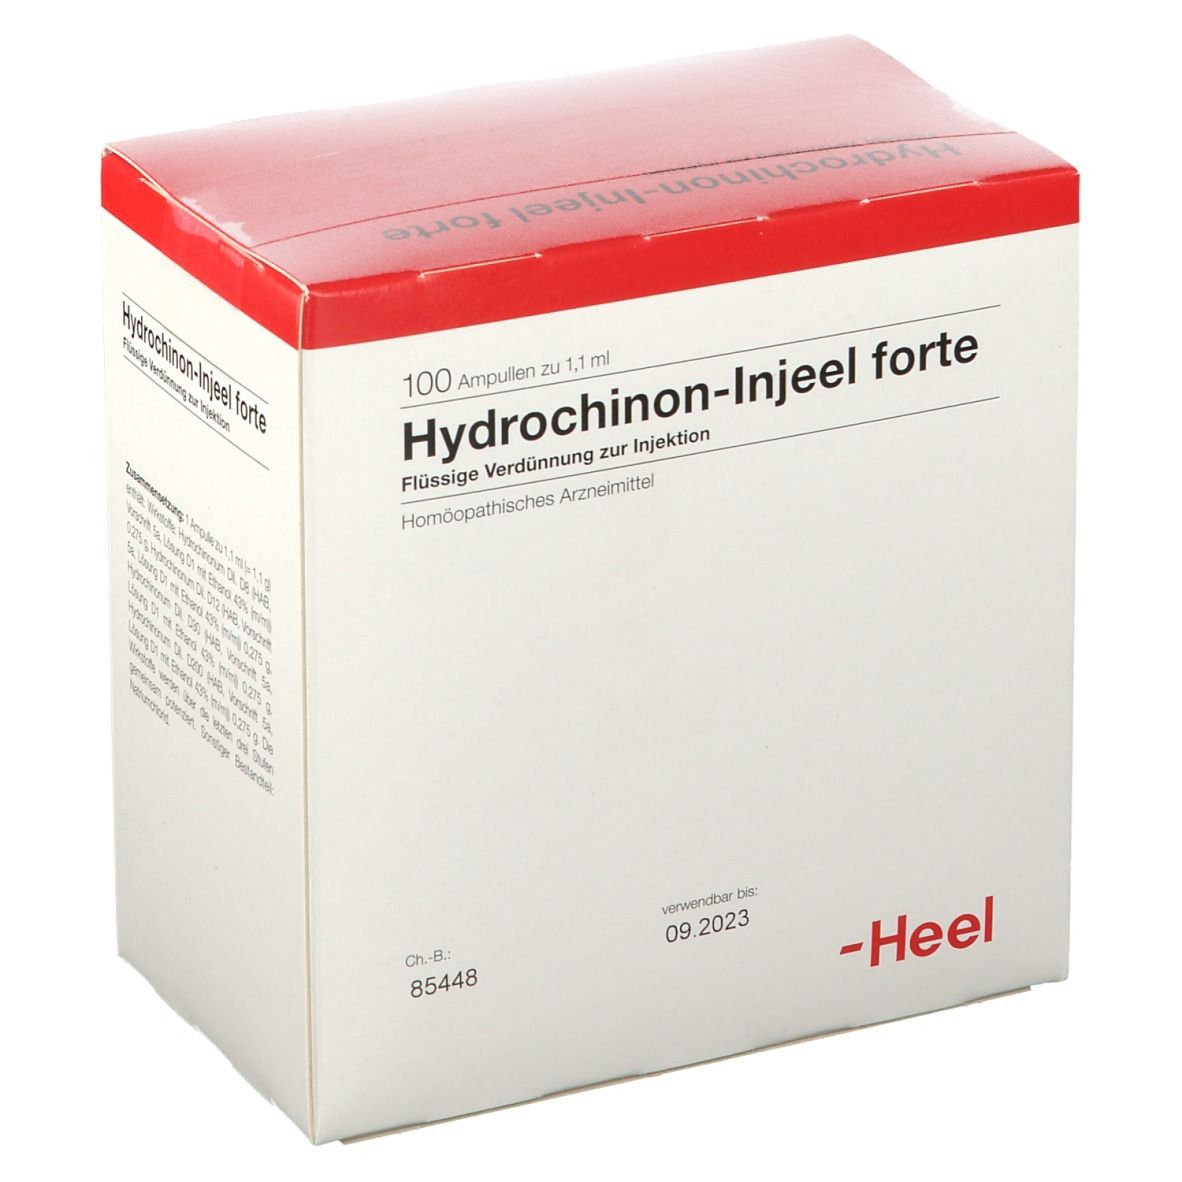 Hydrochinon-Injeel® forte Ampullen